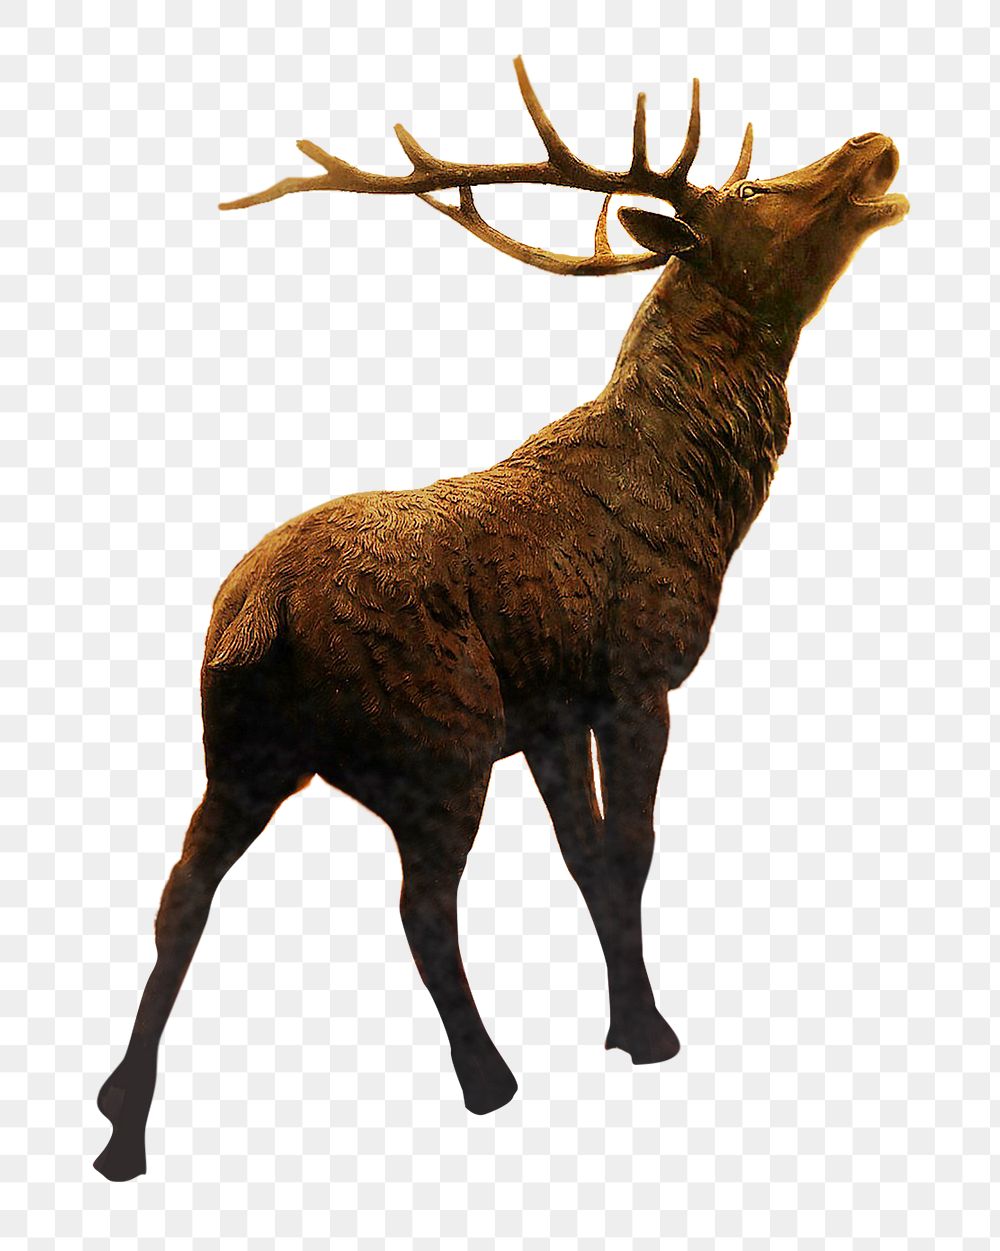 Elk with antlers png sticker, transparent background